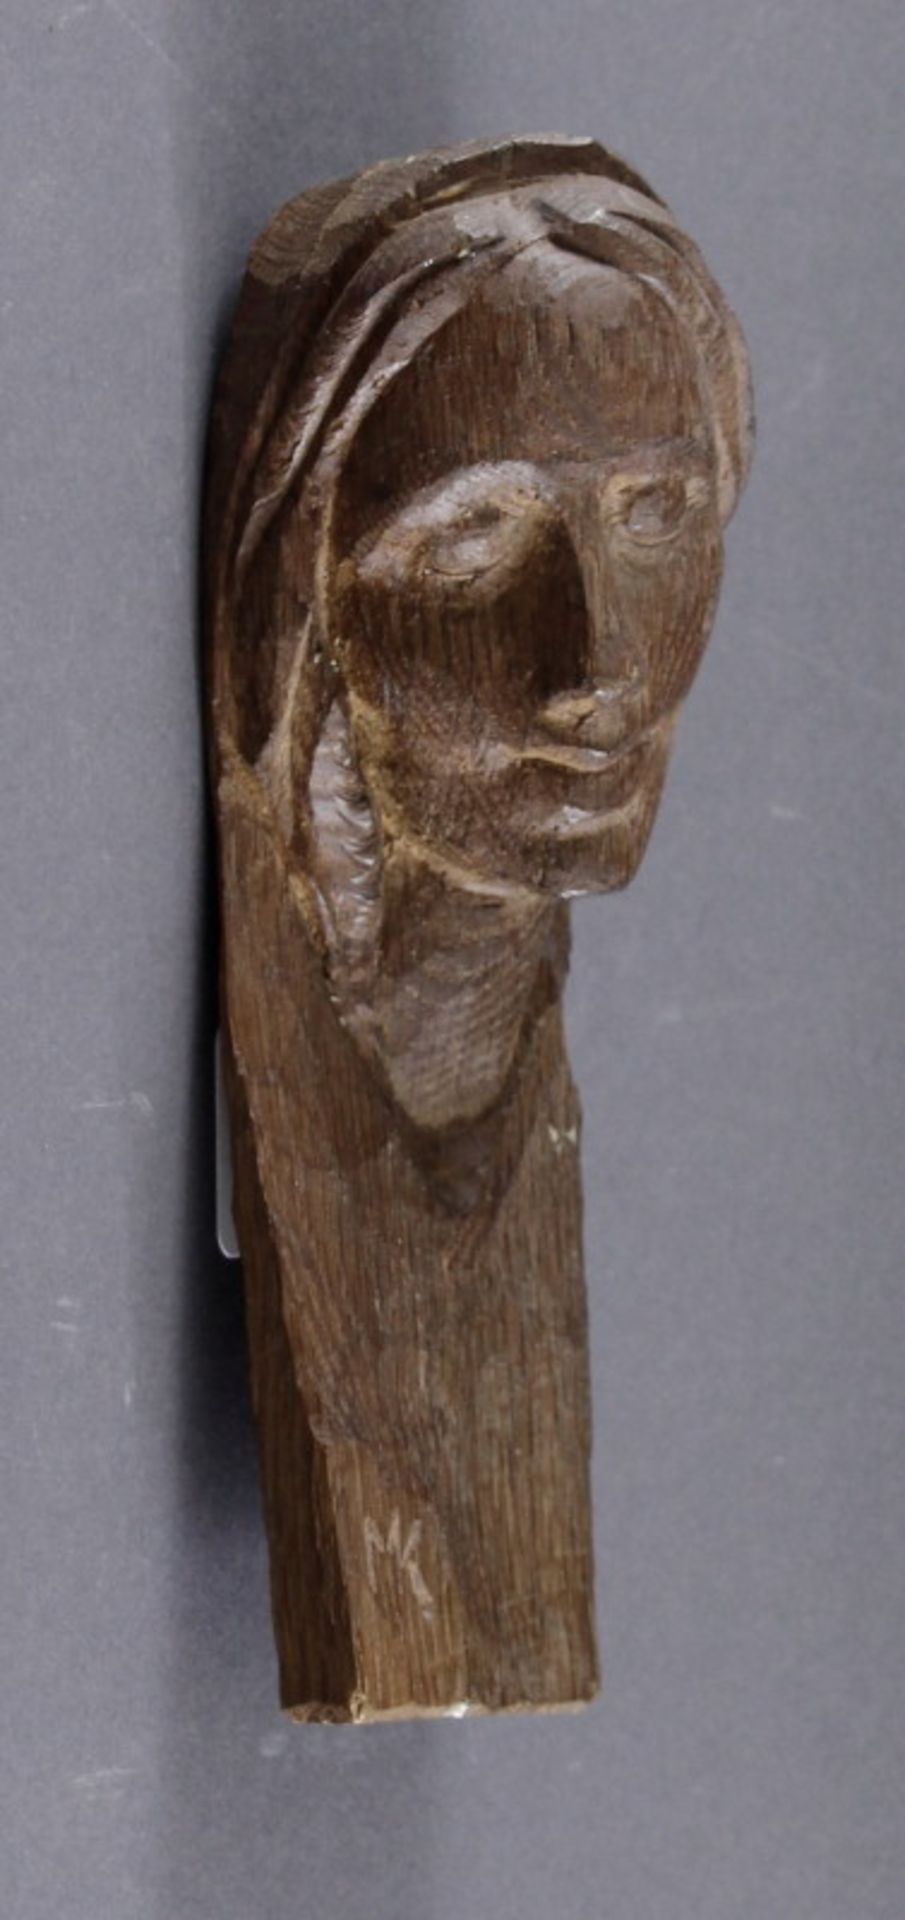 Robert Michael Komorowski (1905 - 1970), Holz Skulptur, "Madonna" monogrammiert "MK", originaler - Bild 2 aus 3